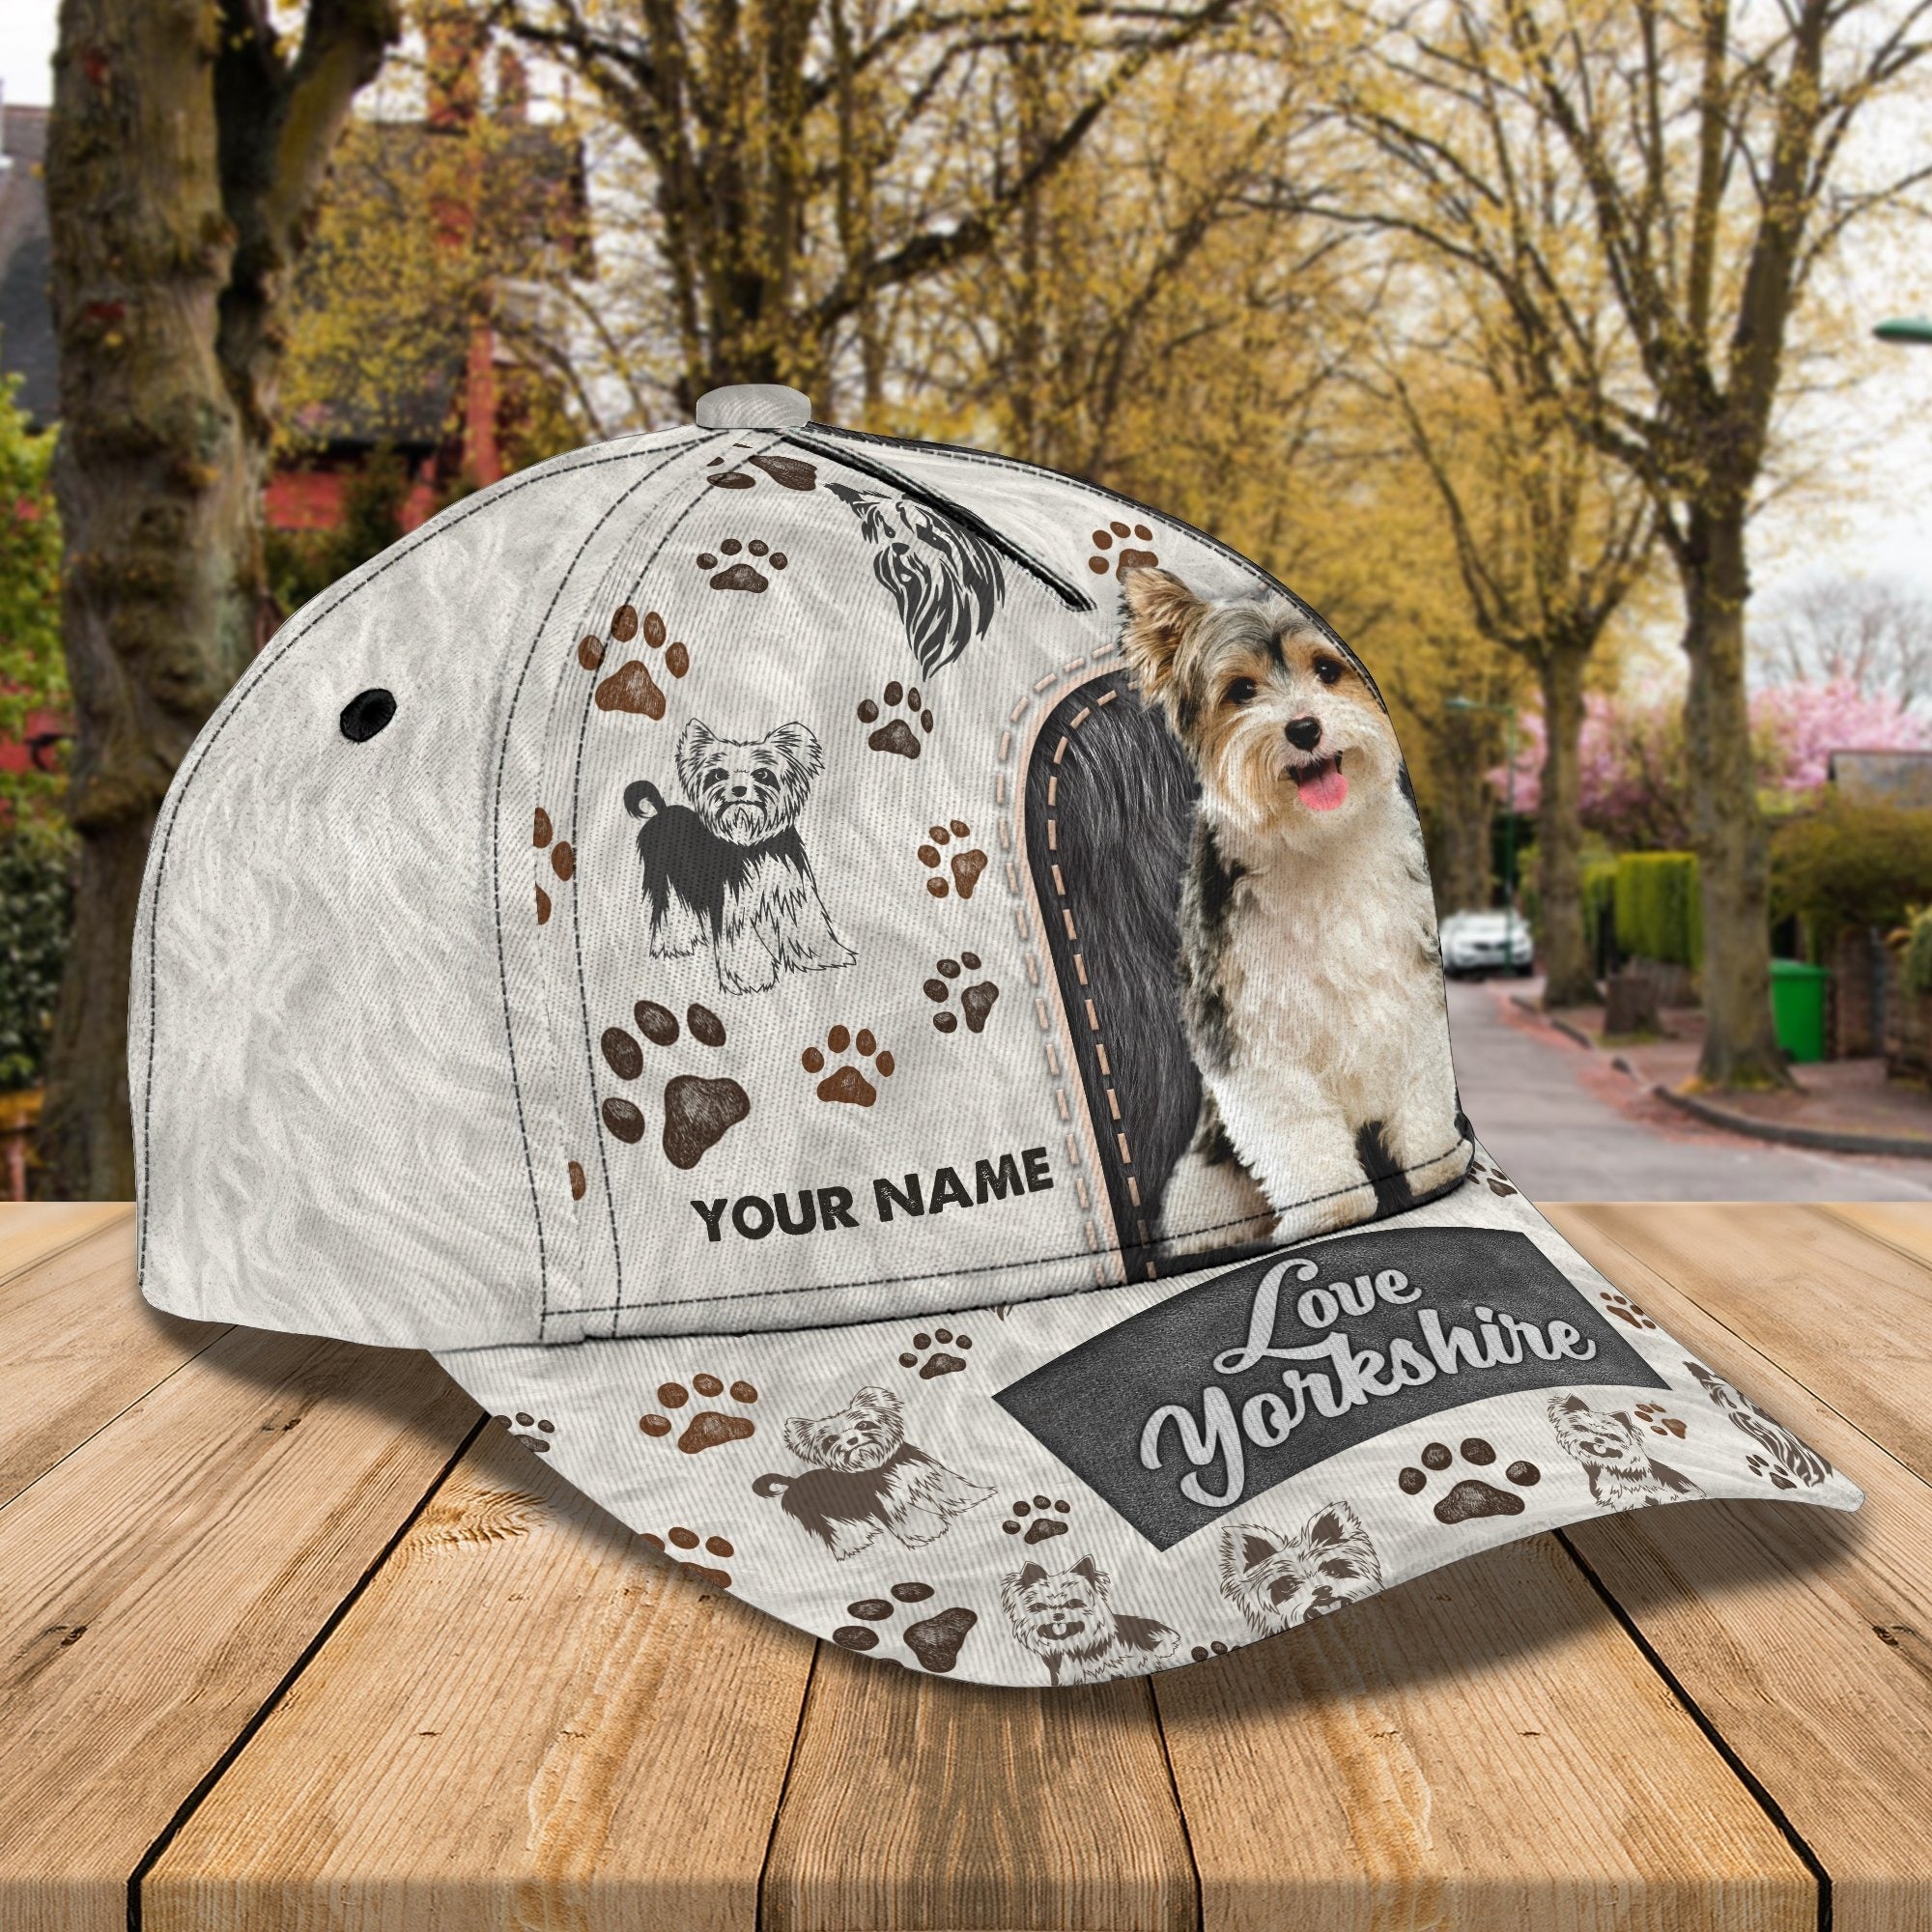 Personalized Baseball Yorkshire Cap Hat For Dog Lover/ 3D Full Print Yorkshire Dog Cap Hat